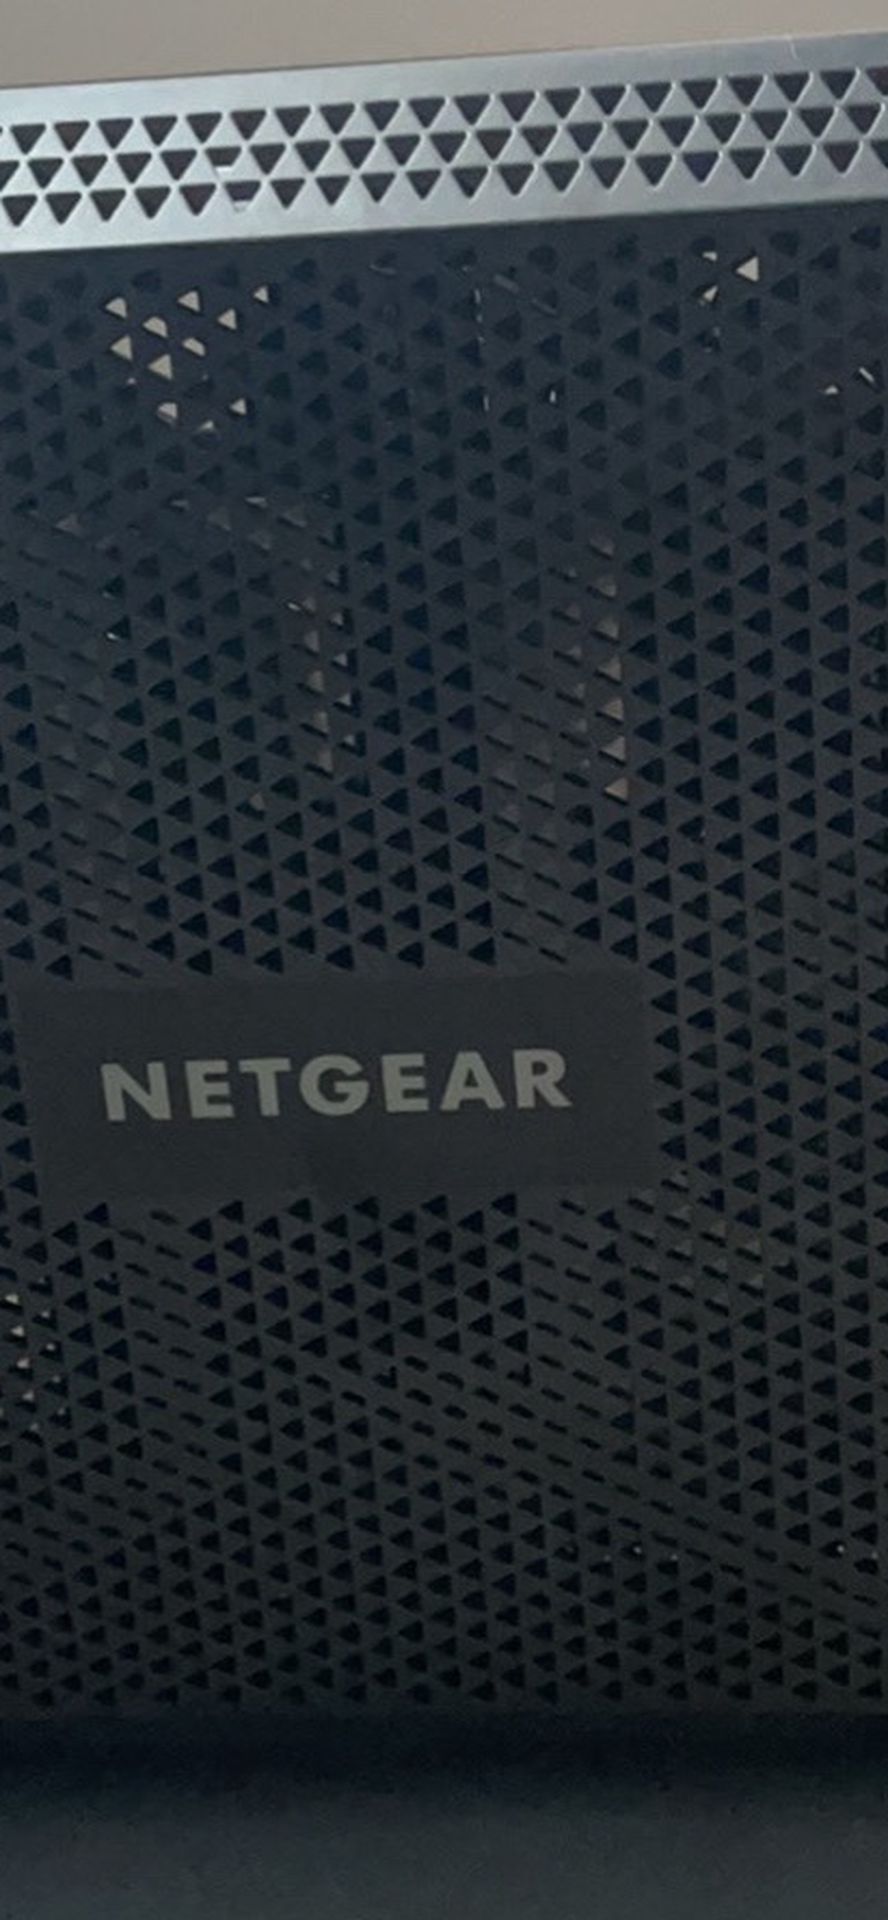 NETGEAR Nighthawk Cable Modem Wi-Fi Router Combo C7000 (version 2)